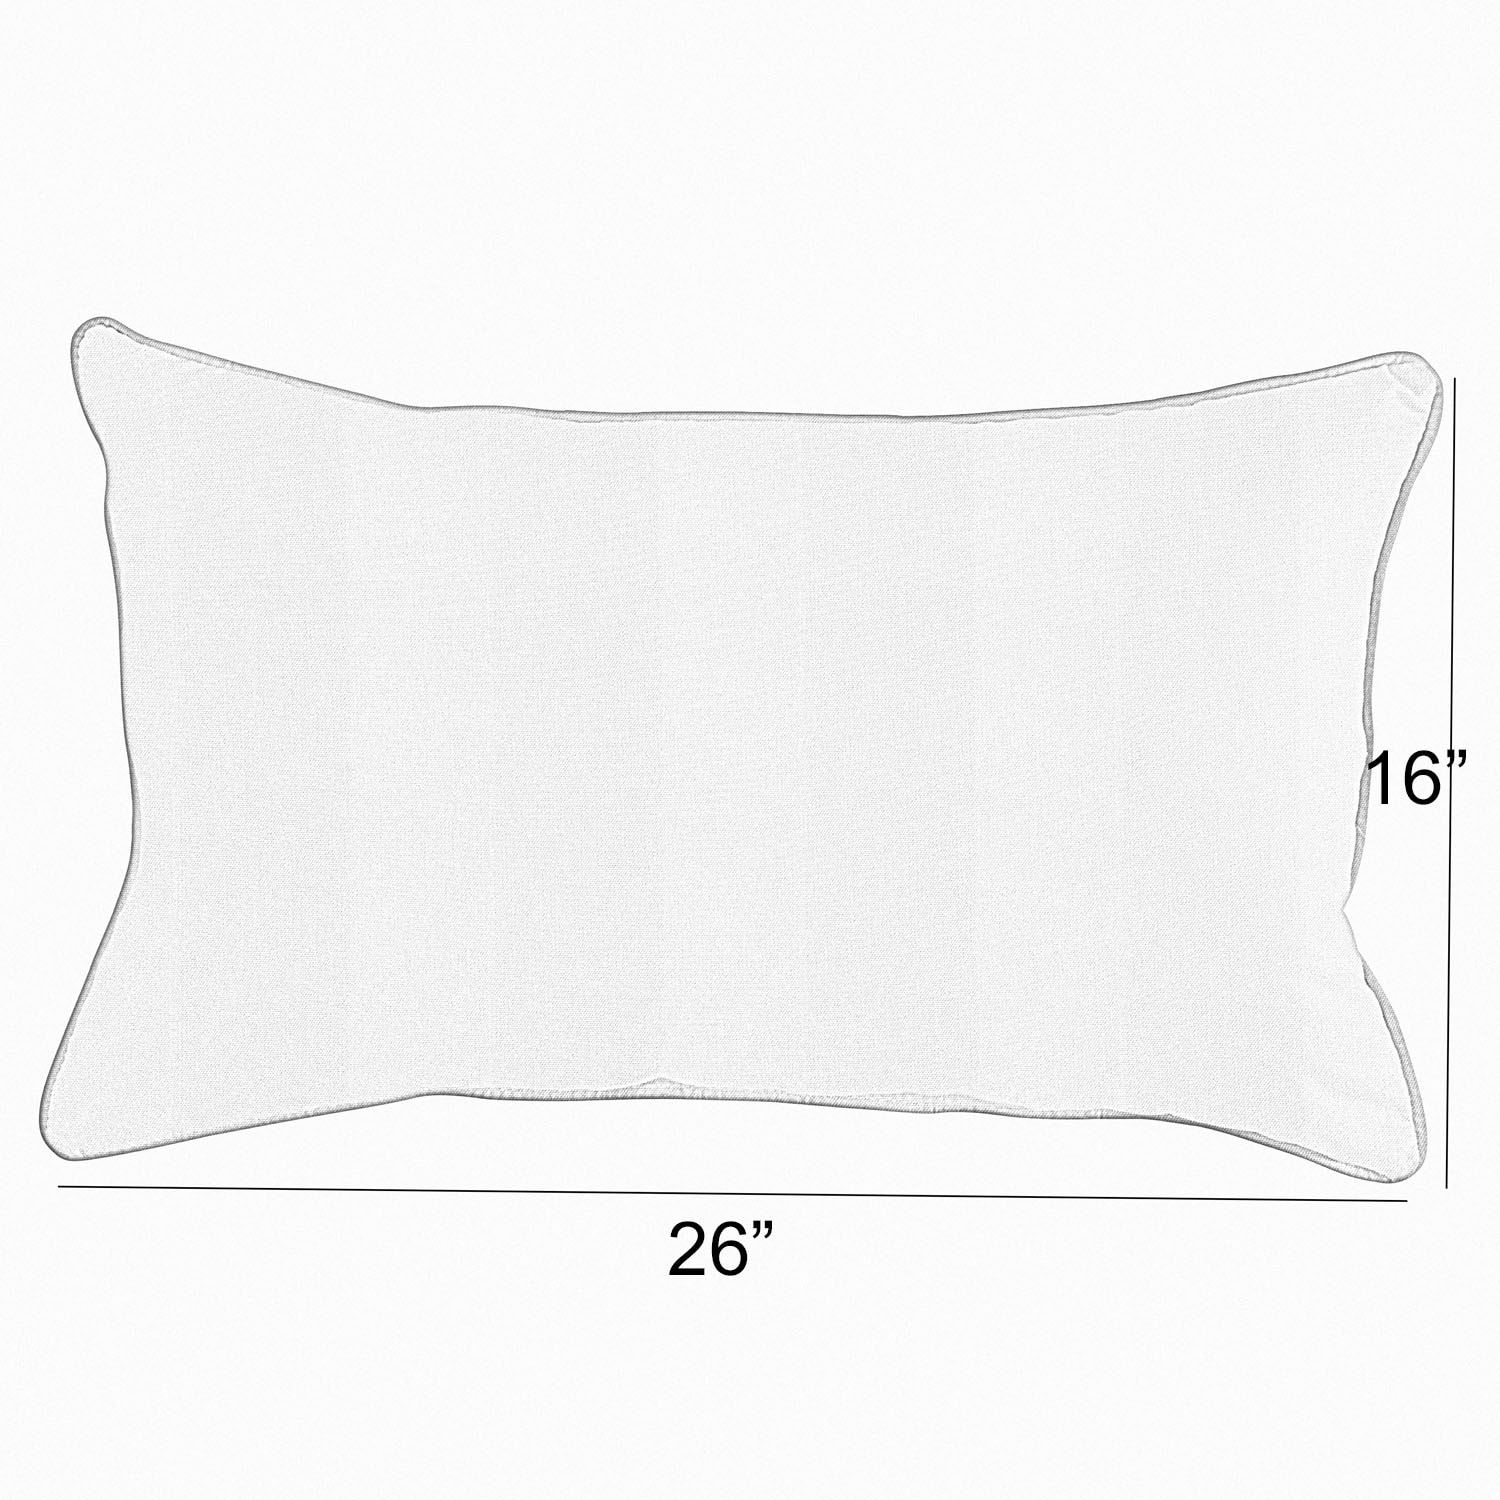 Sunbrella Dimone Sequoia Corded Indoor/ Outdoor Pillows (Set of 2)